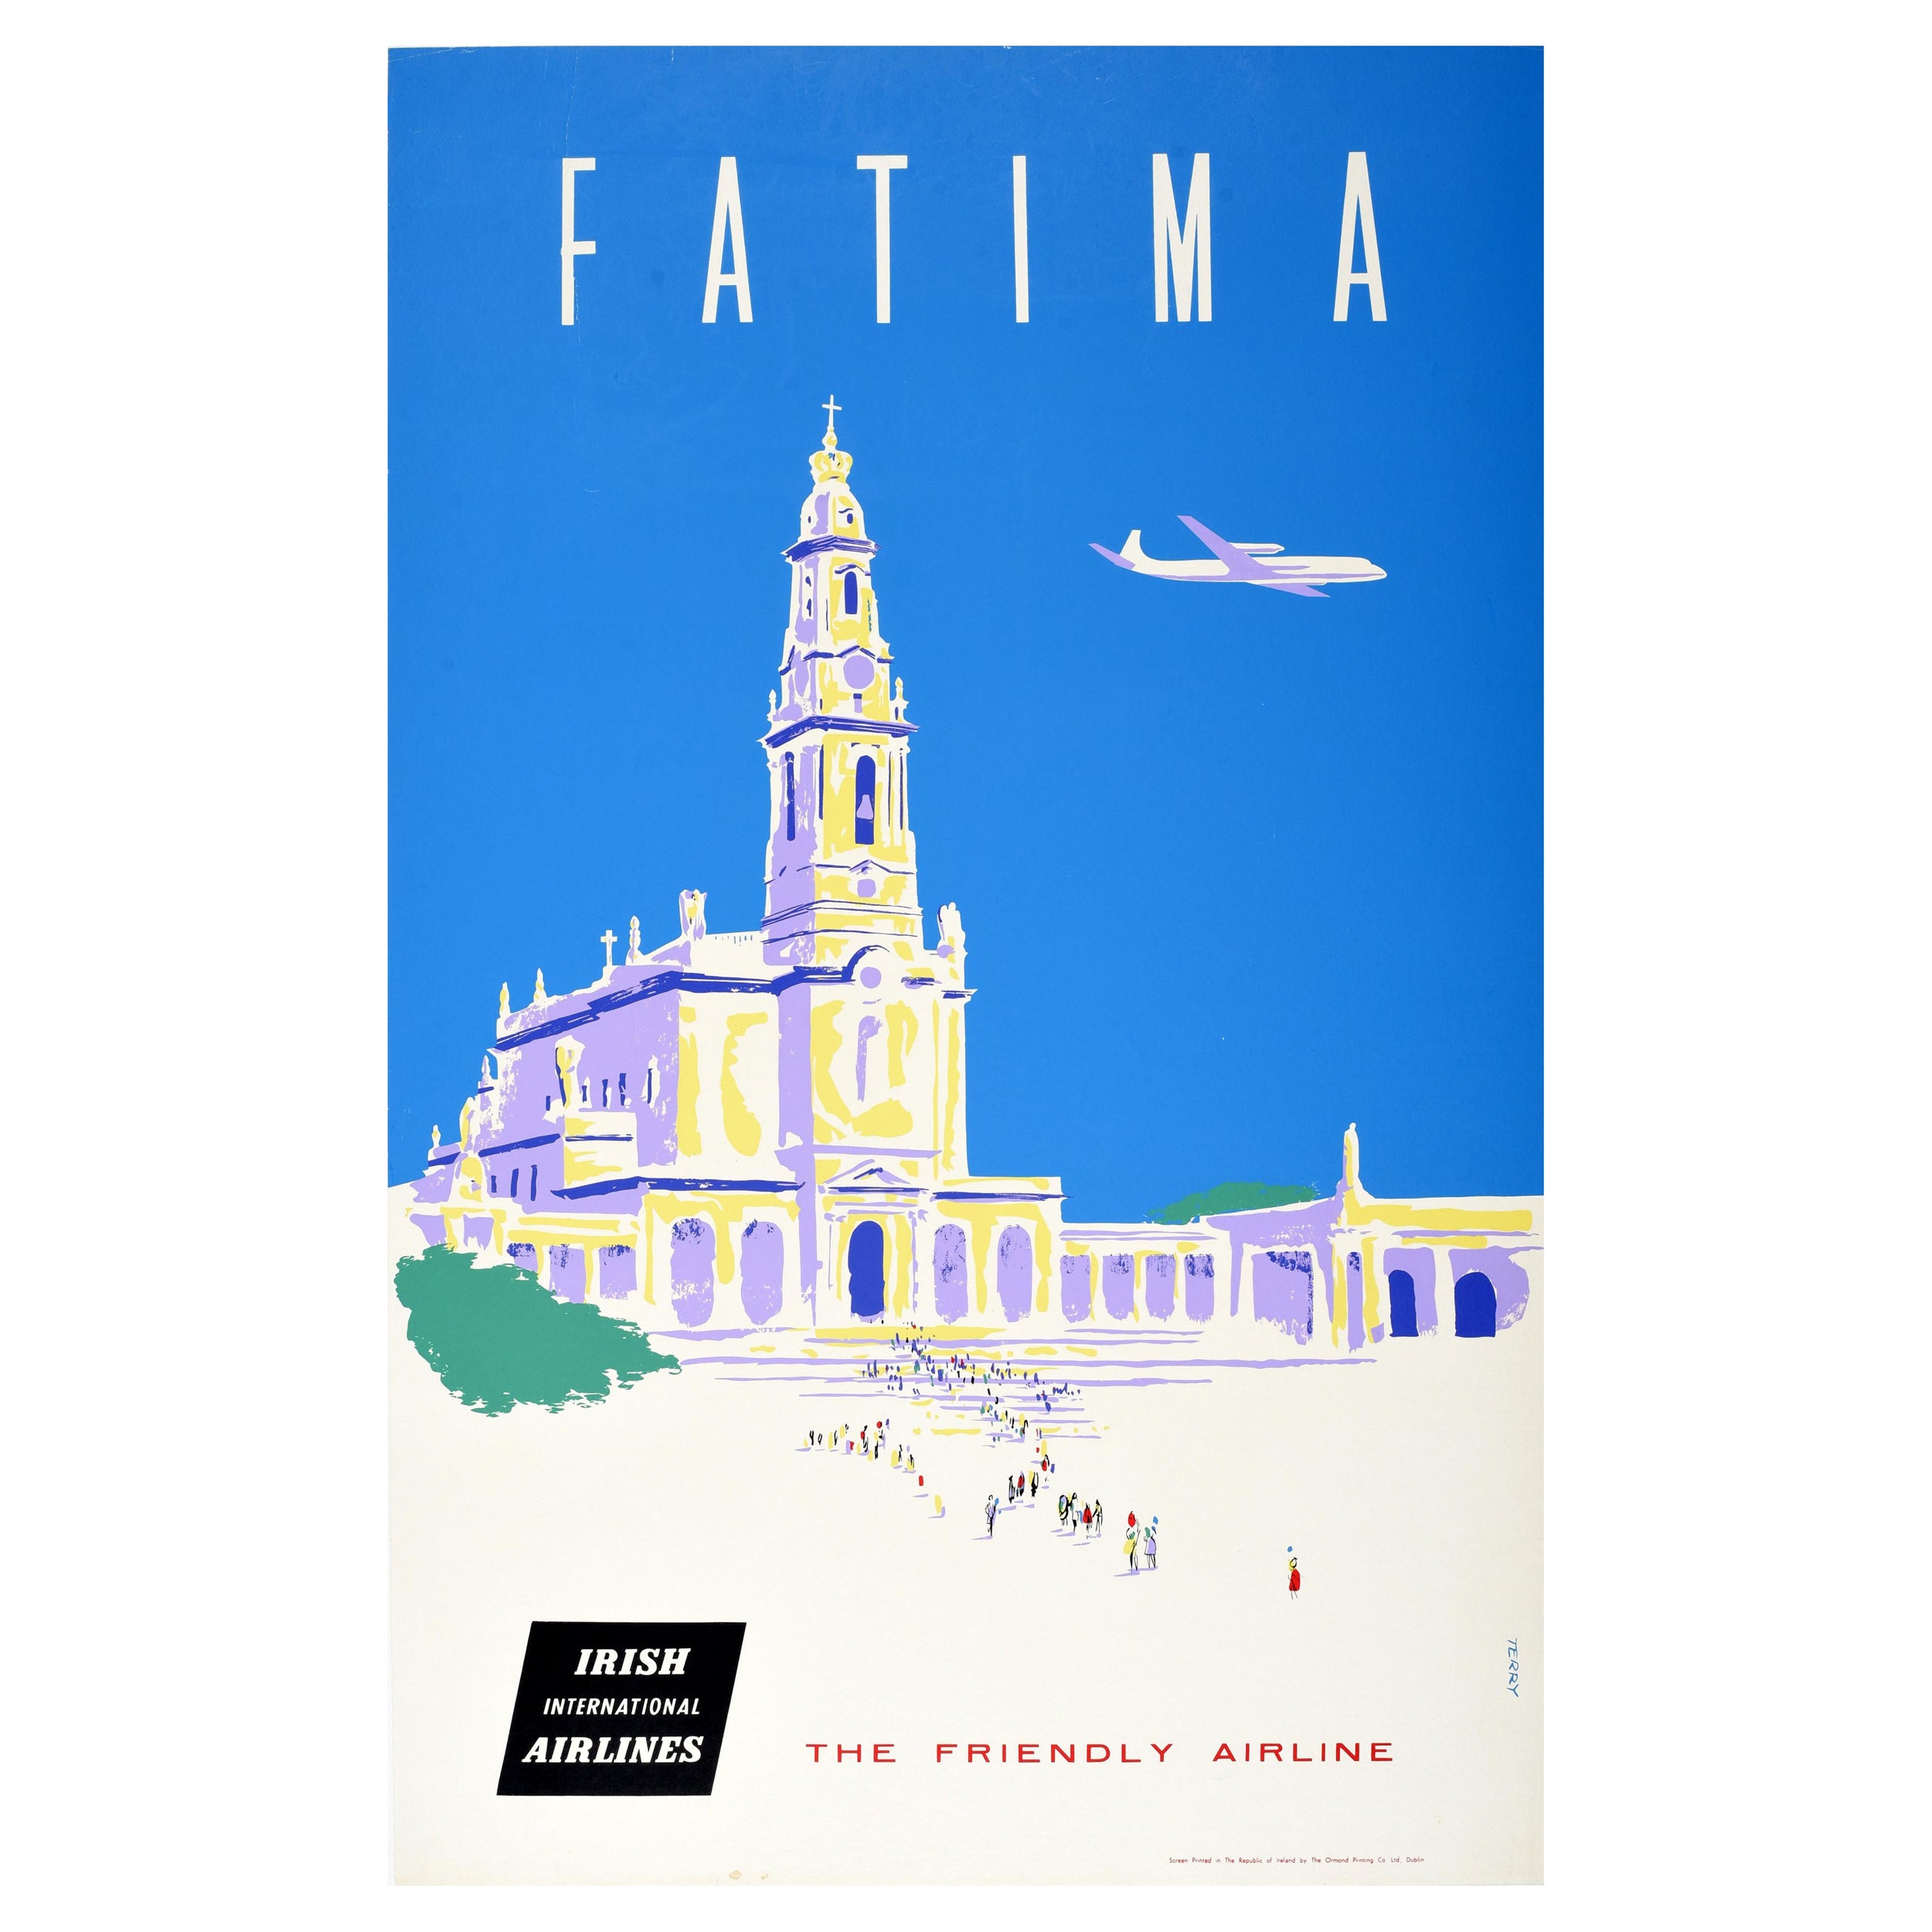 Affiche vintage originale de voyage Fatima, Portugal, Compagnie internationale irlandaise d'aviation